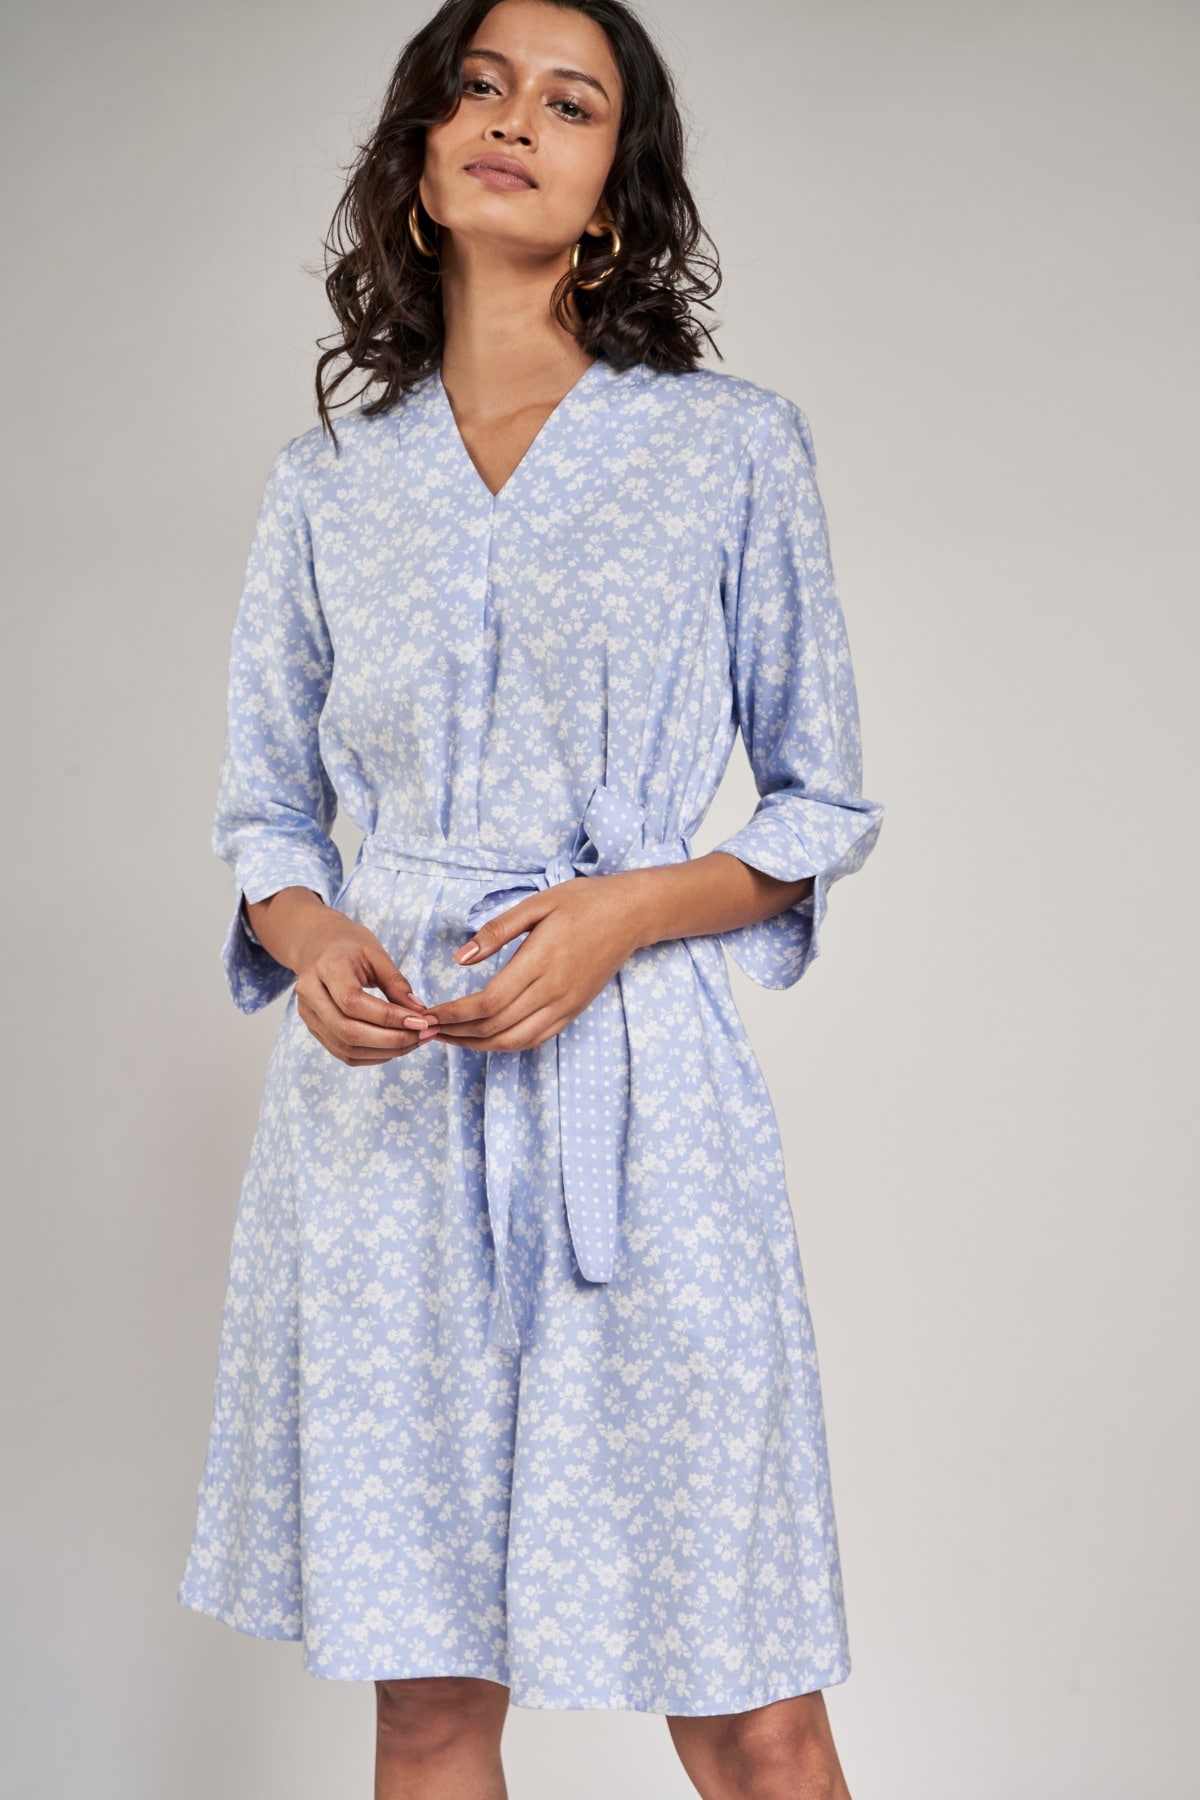 3 - Powder Blue Floral Printed Shift Dress, image 3